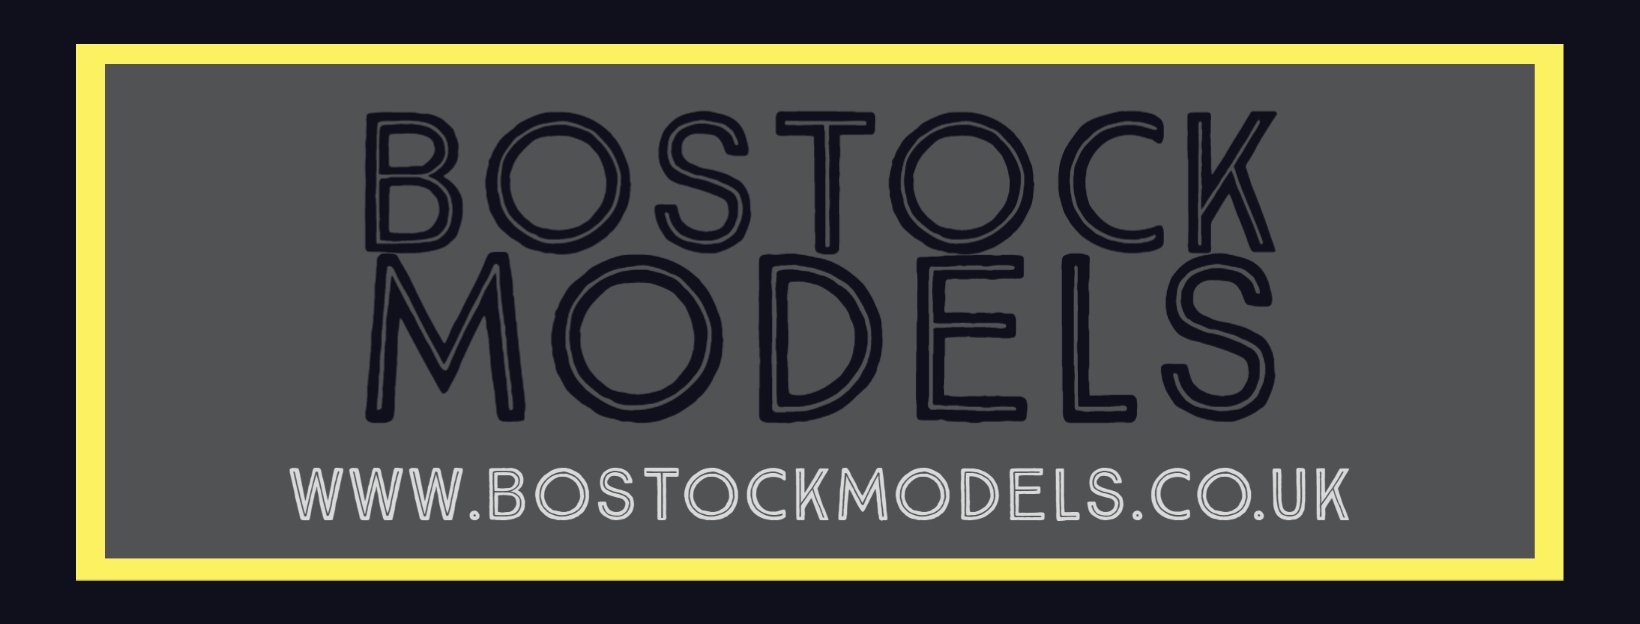 Bostock Models